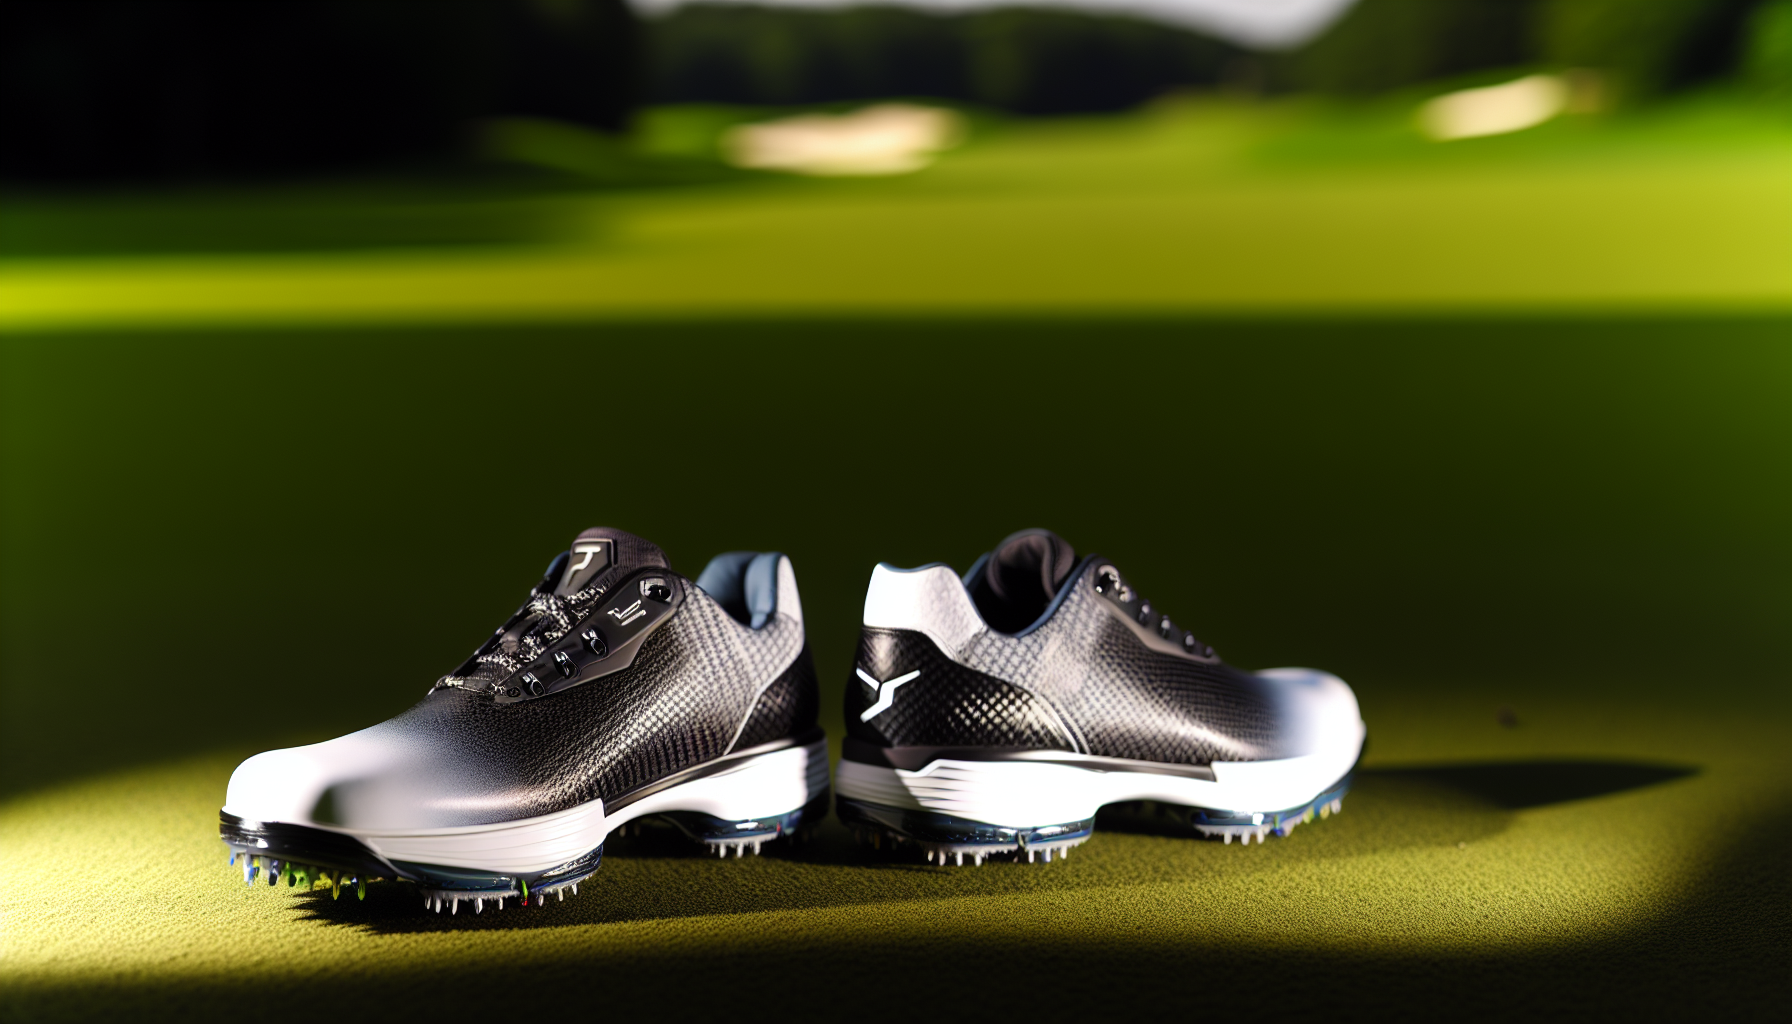 FootJoy HyperFlex Carbon Golf Shoes for wide feet